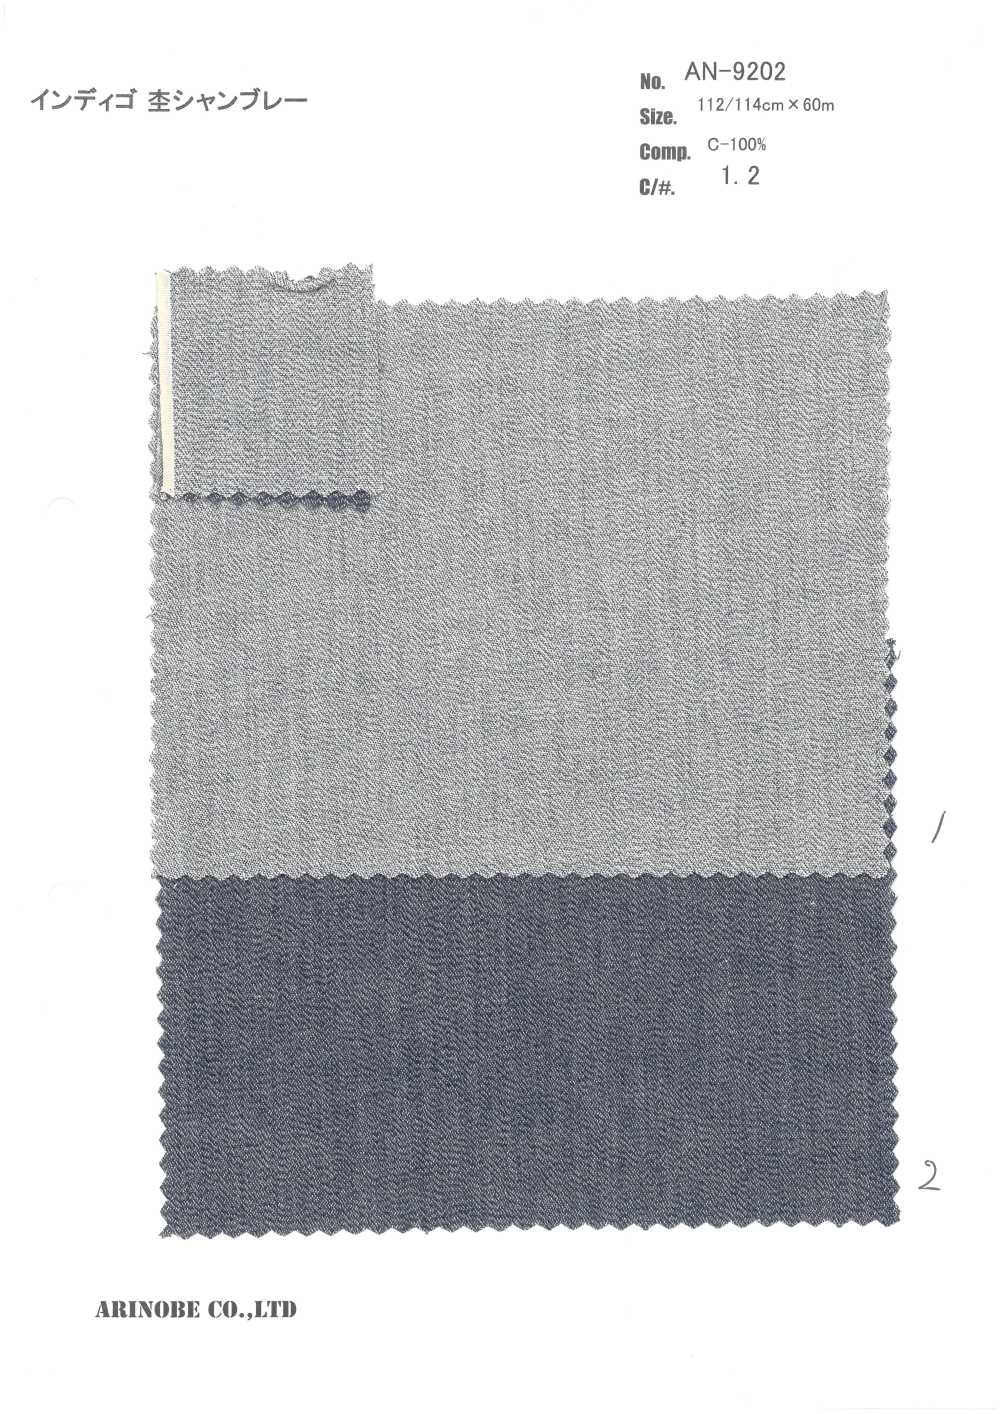 AN-9202 Indigo Heather Chambray[Têxtil / Tecido] ARINOBE CO., LTD.